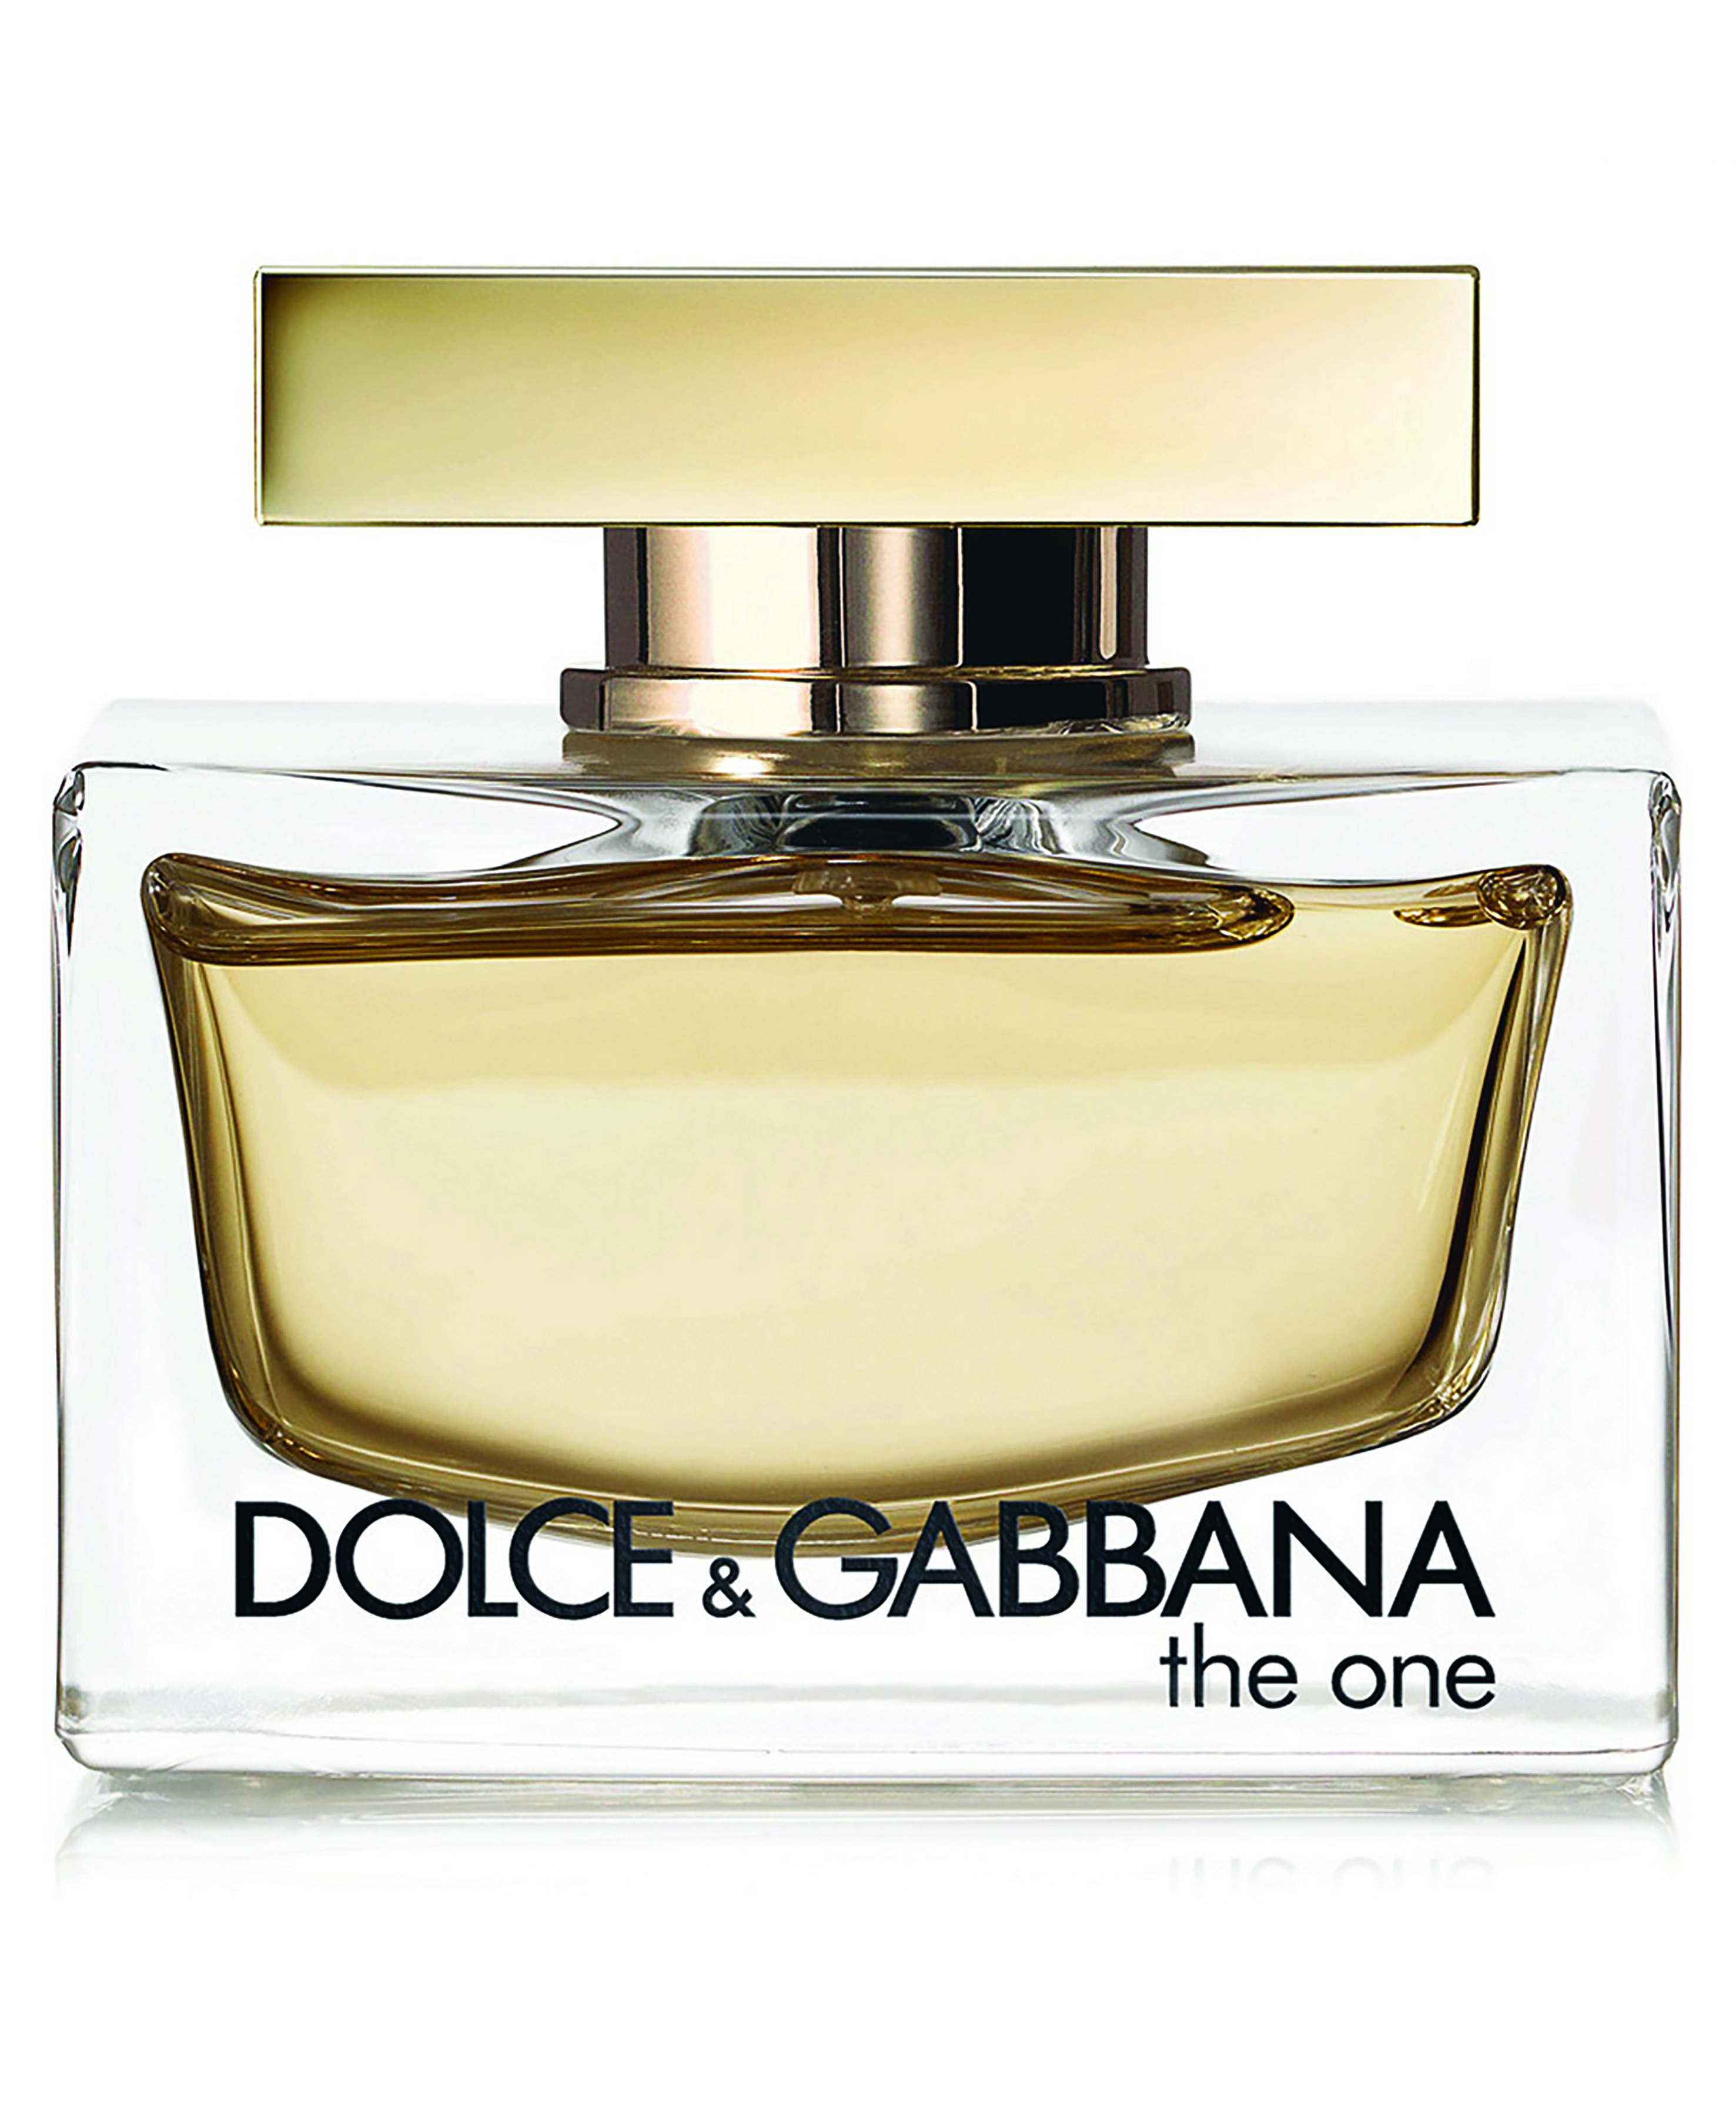 Dolce&Gabbana The One, Eau de toilette, 50 ml (razlika: 159 kn) / Douglas Hrvatska: 739 kn / Douglas Italija: 580 kn